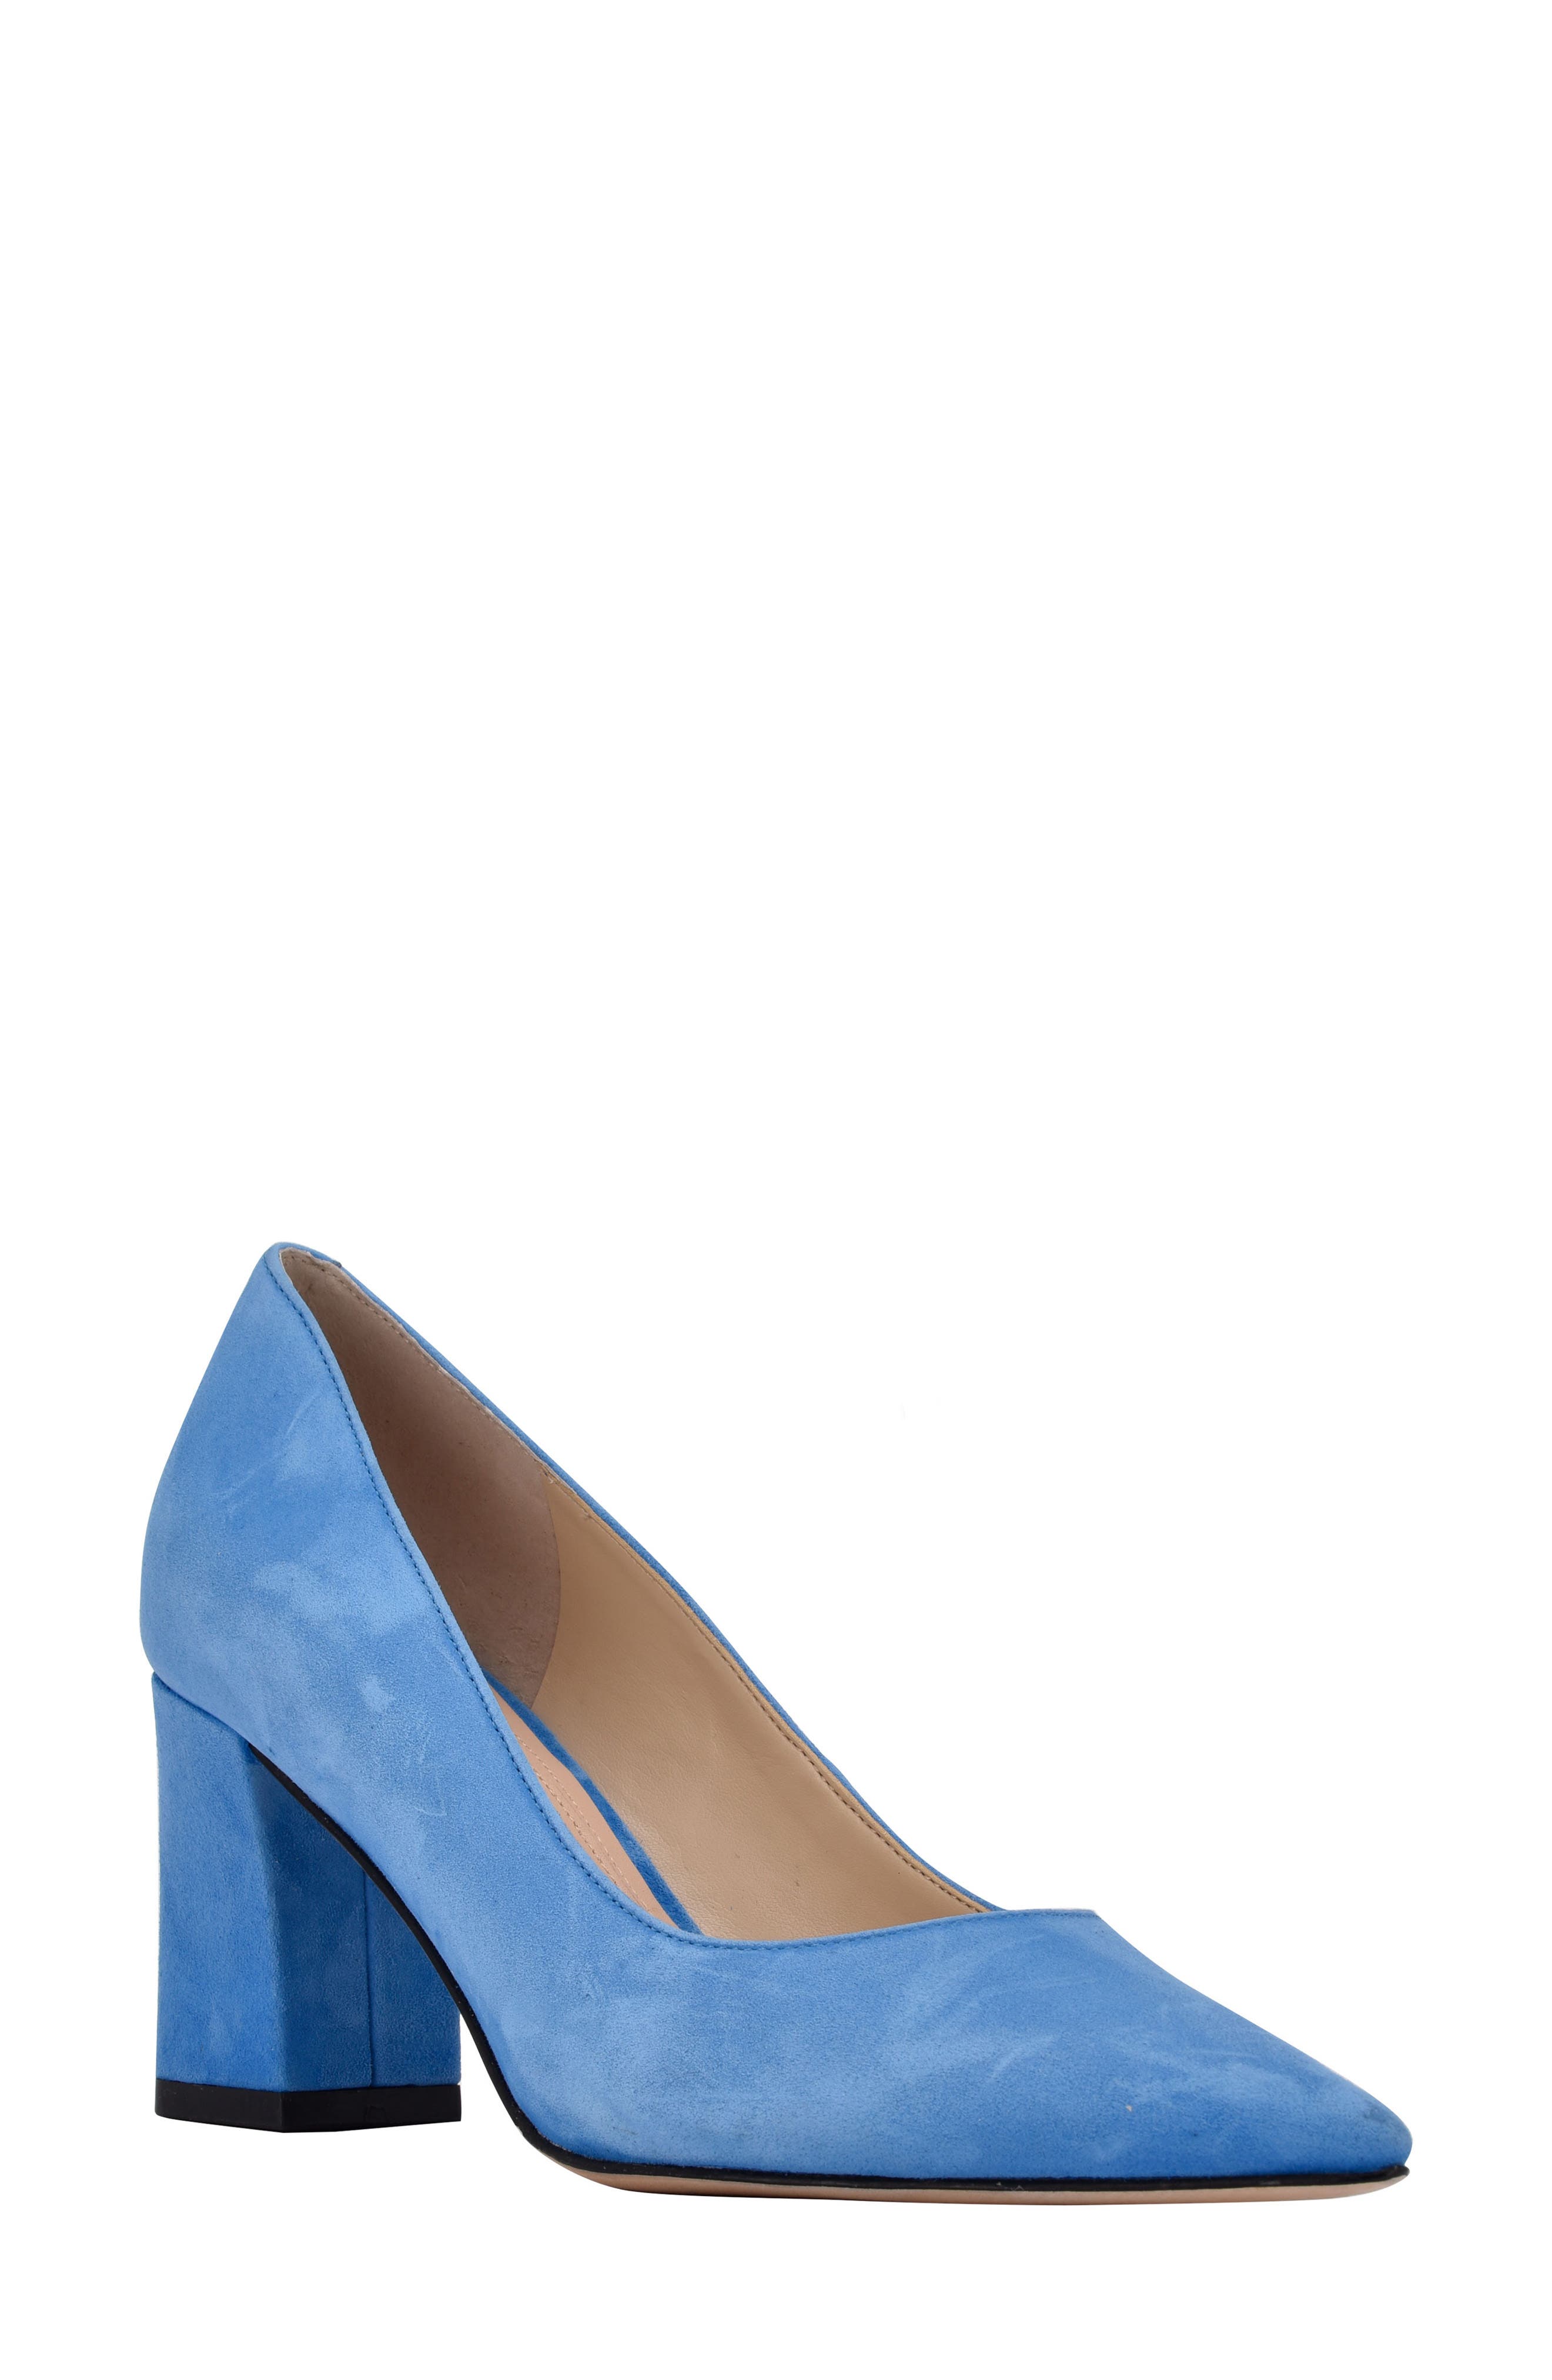 light blue low block heels